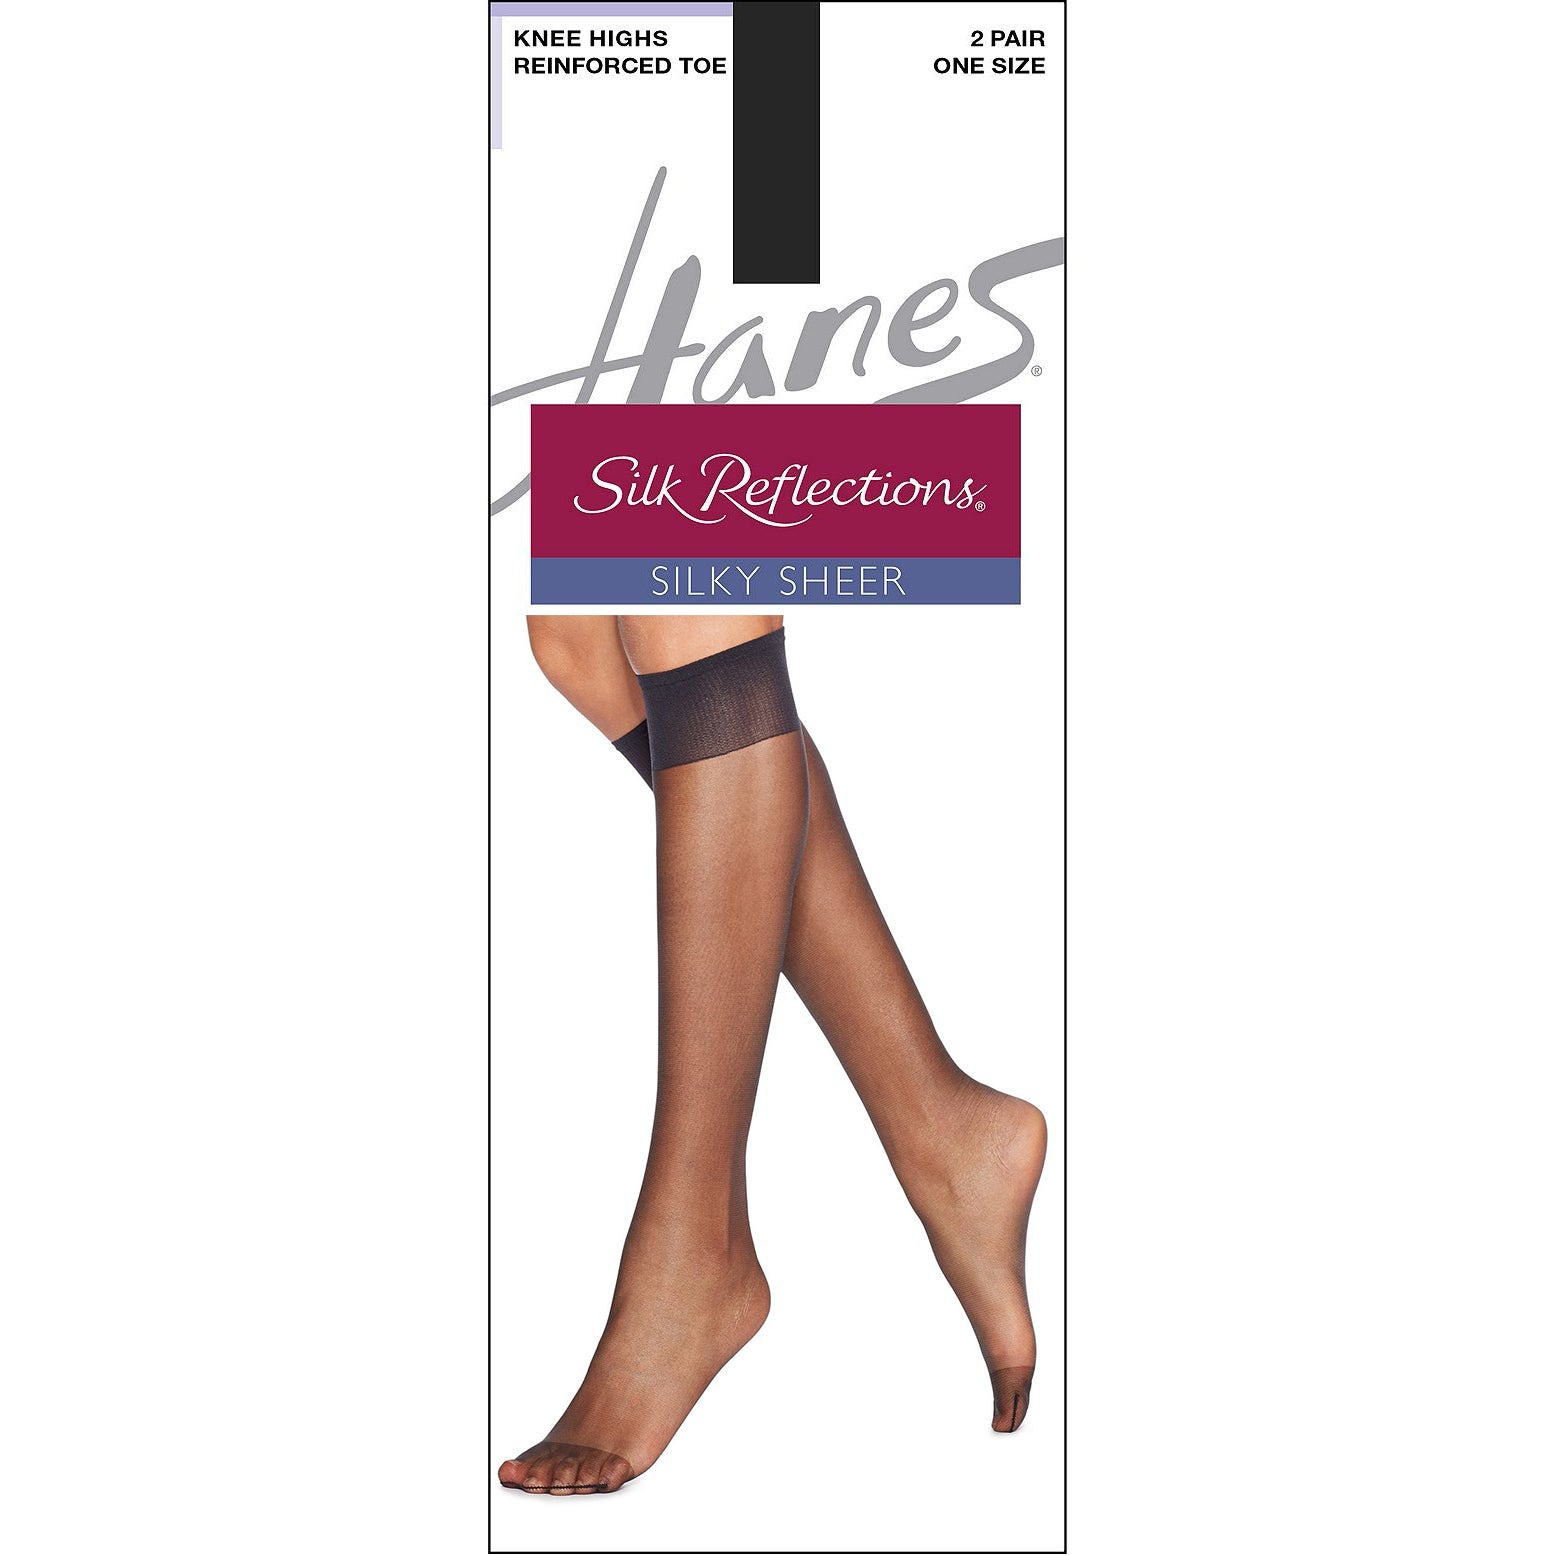 Hanes Premium Women's Silky Sheer Control Top Pantyhose, Natural, Medium